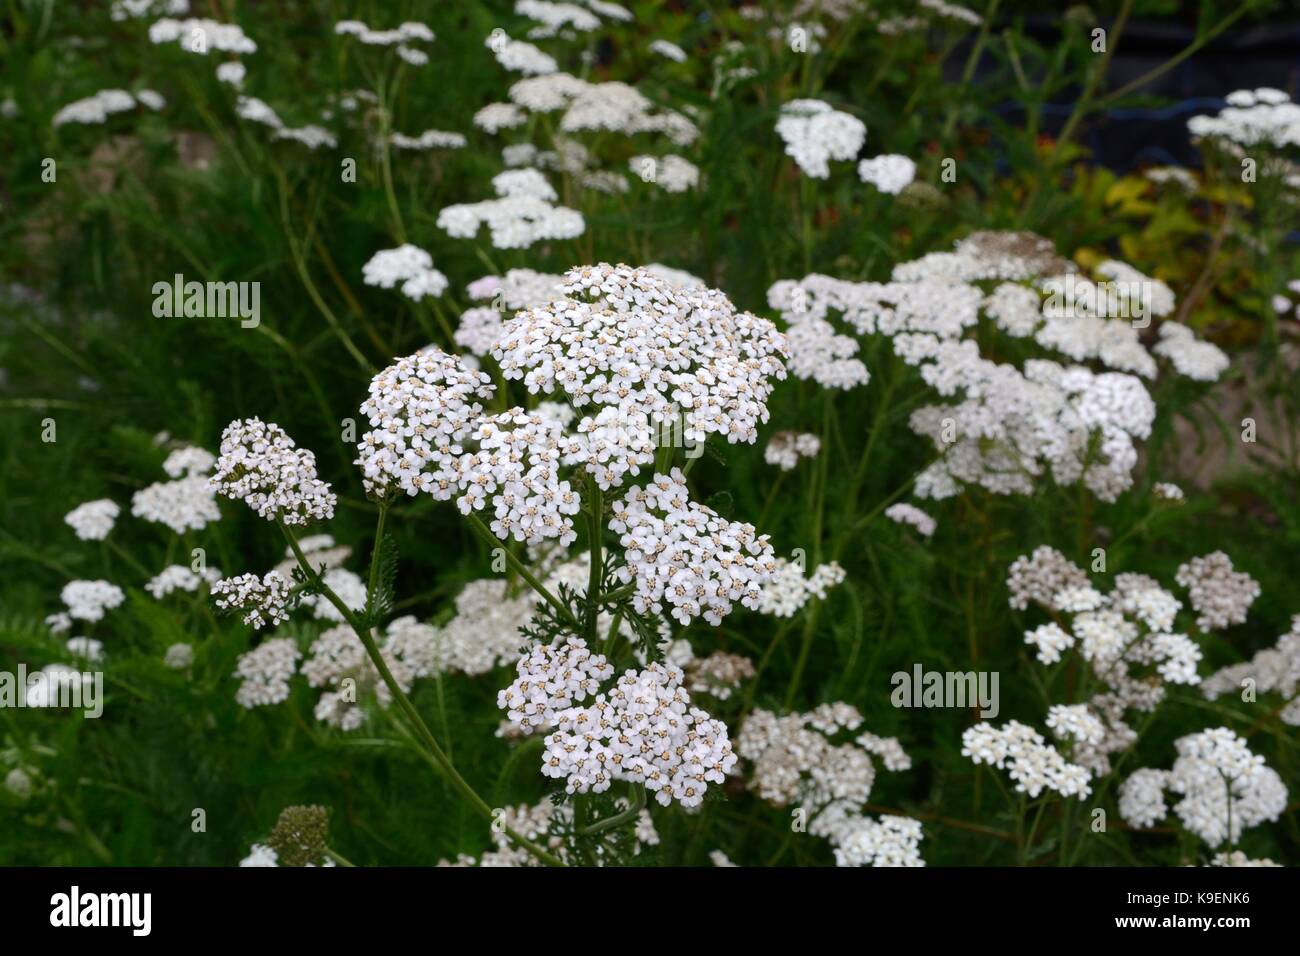 Achillea millefolium Yarrow common yarrow flowers Stock Photo